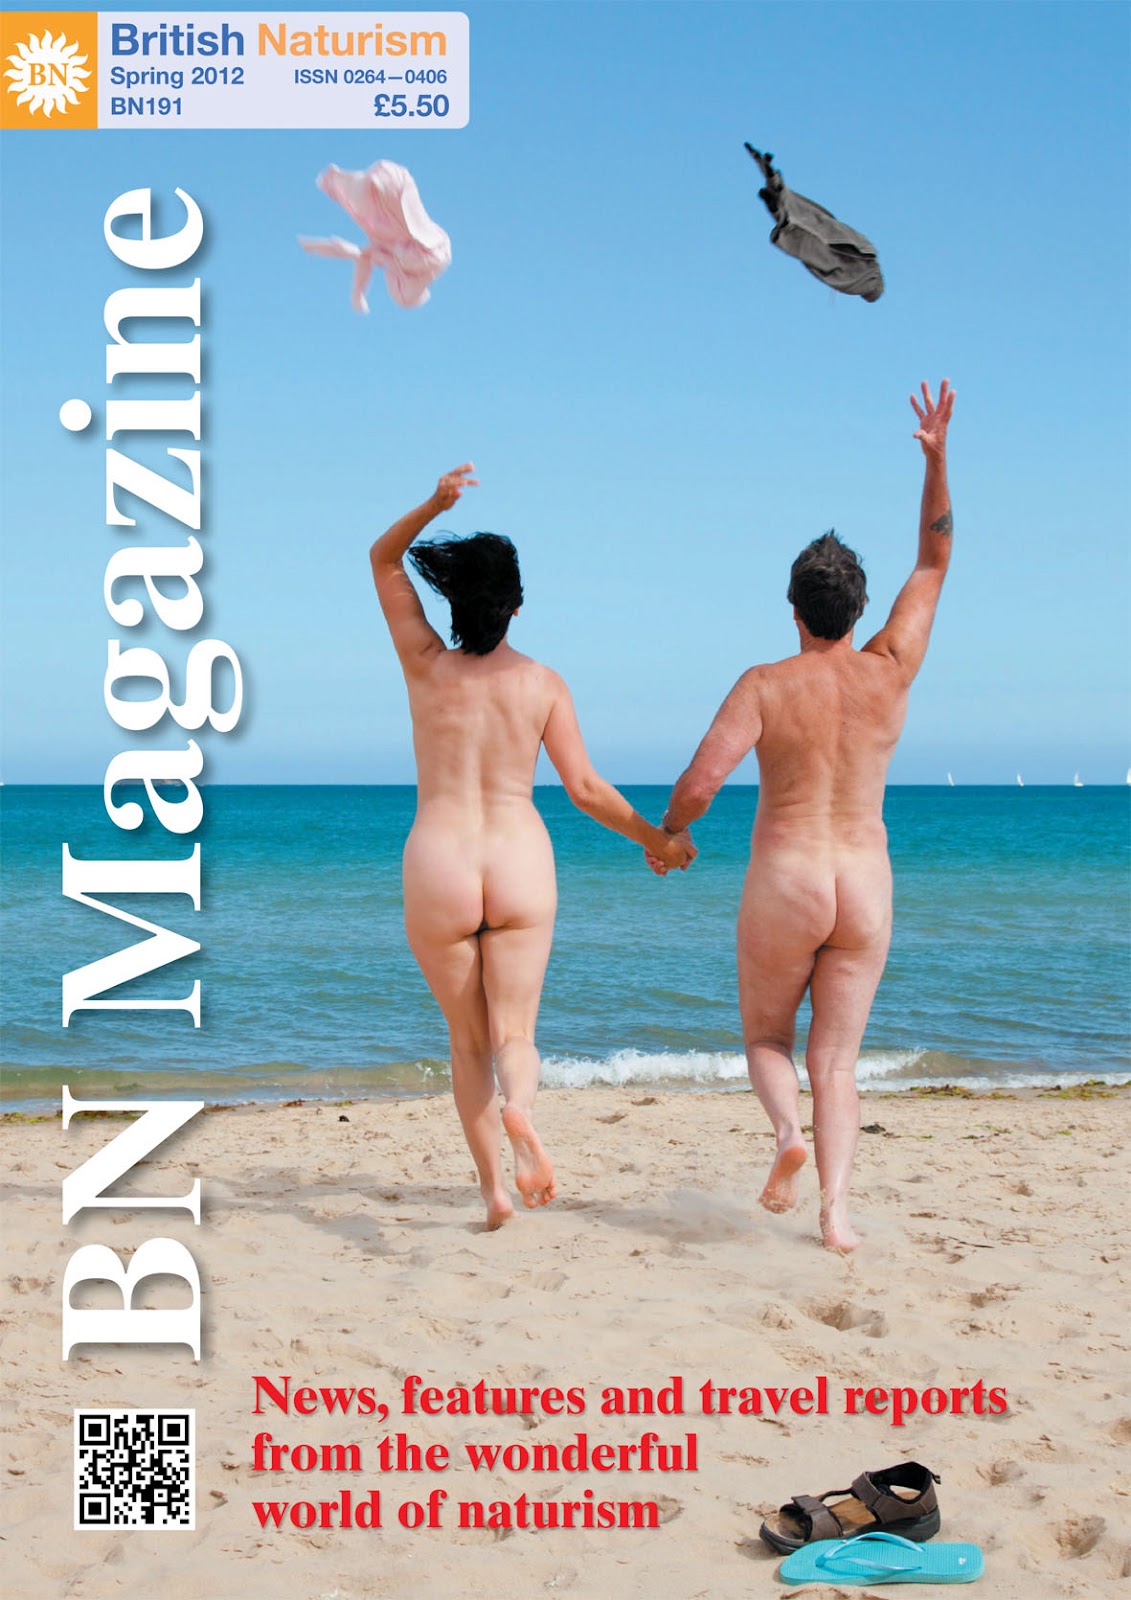 https://www.nudismlife.com/galleries/nudists_and_nude/nudist_cabana/nudist_cabana_555.jpg